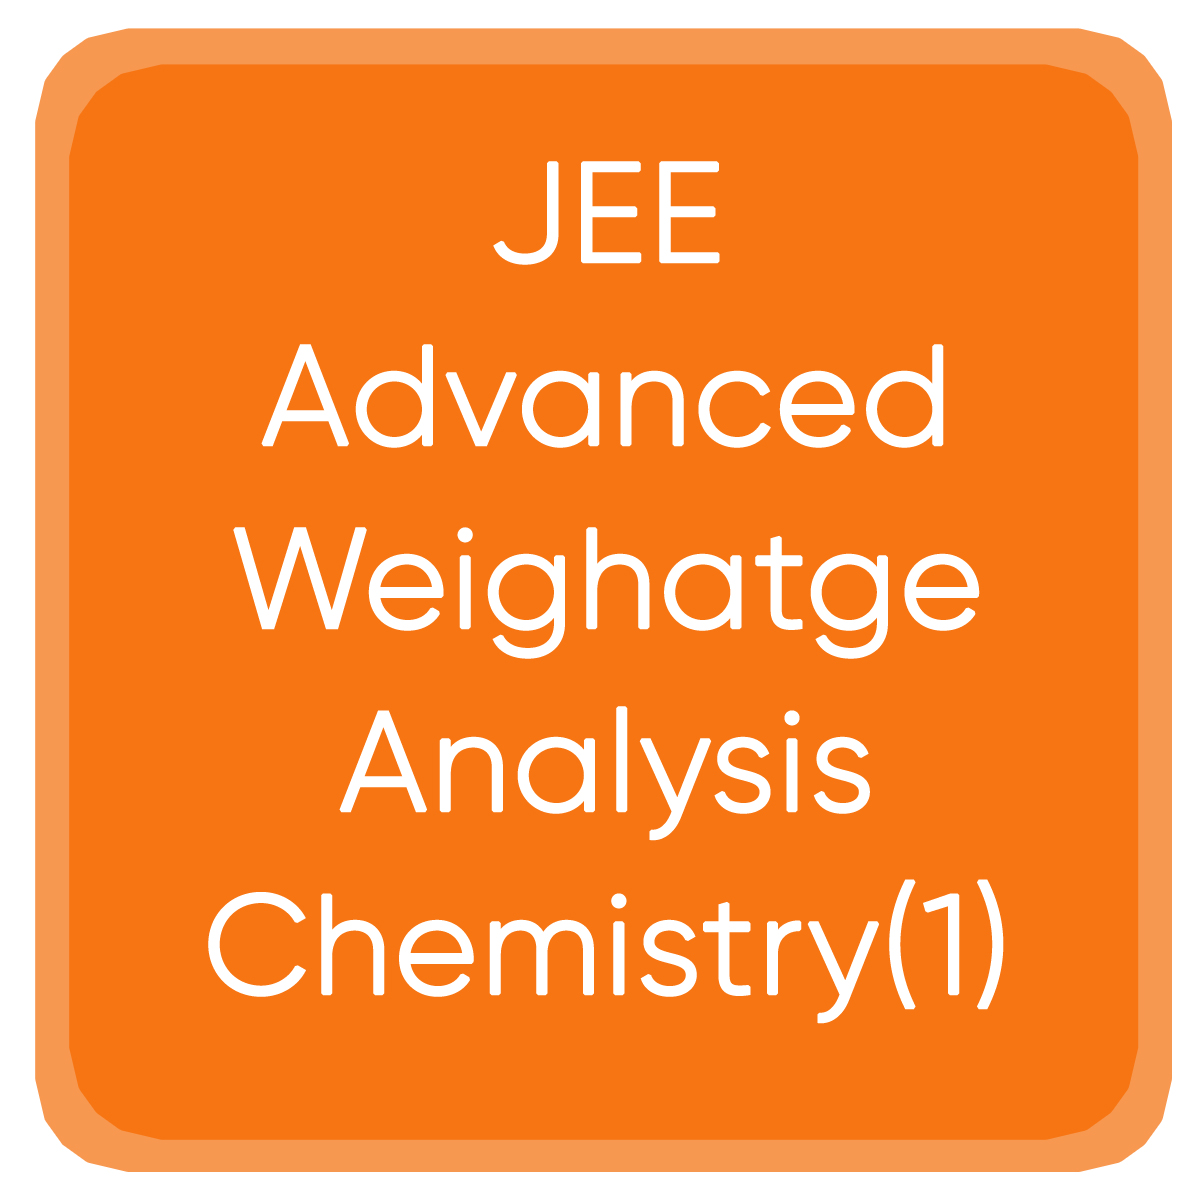 JEE Advanced Weighatge Analysis Chemistry(1)